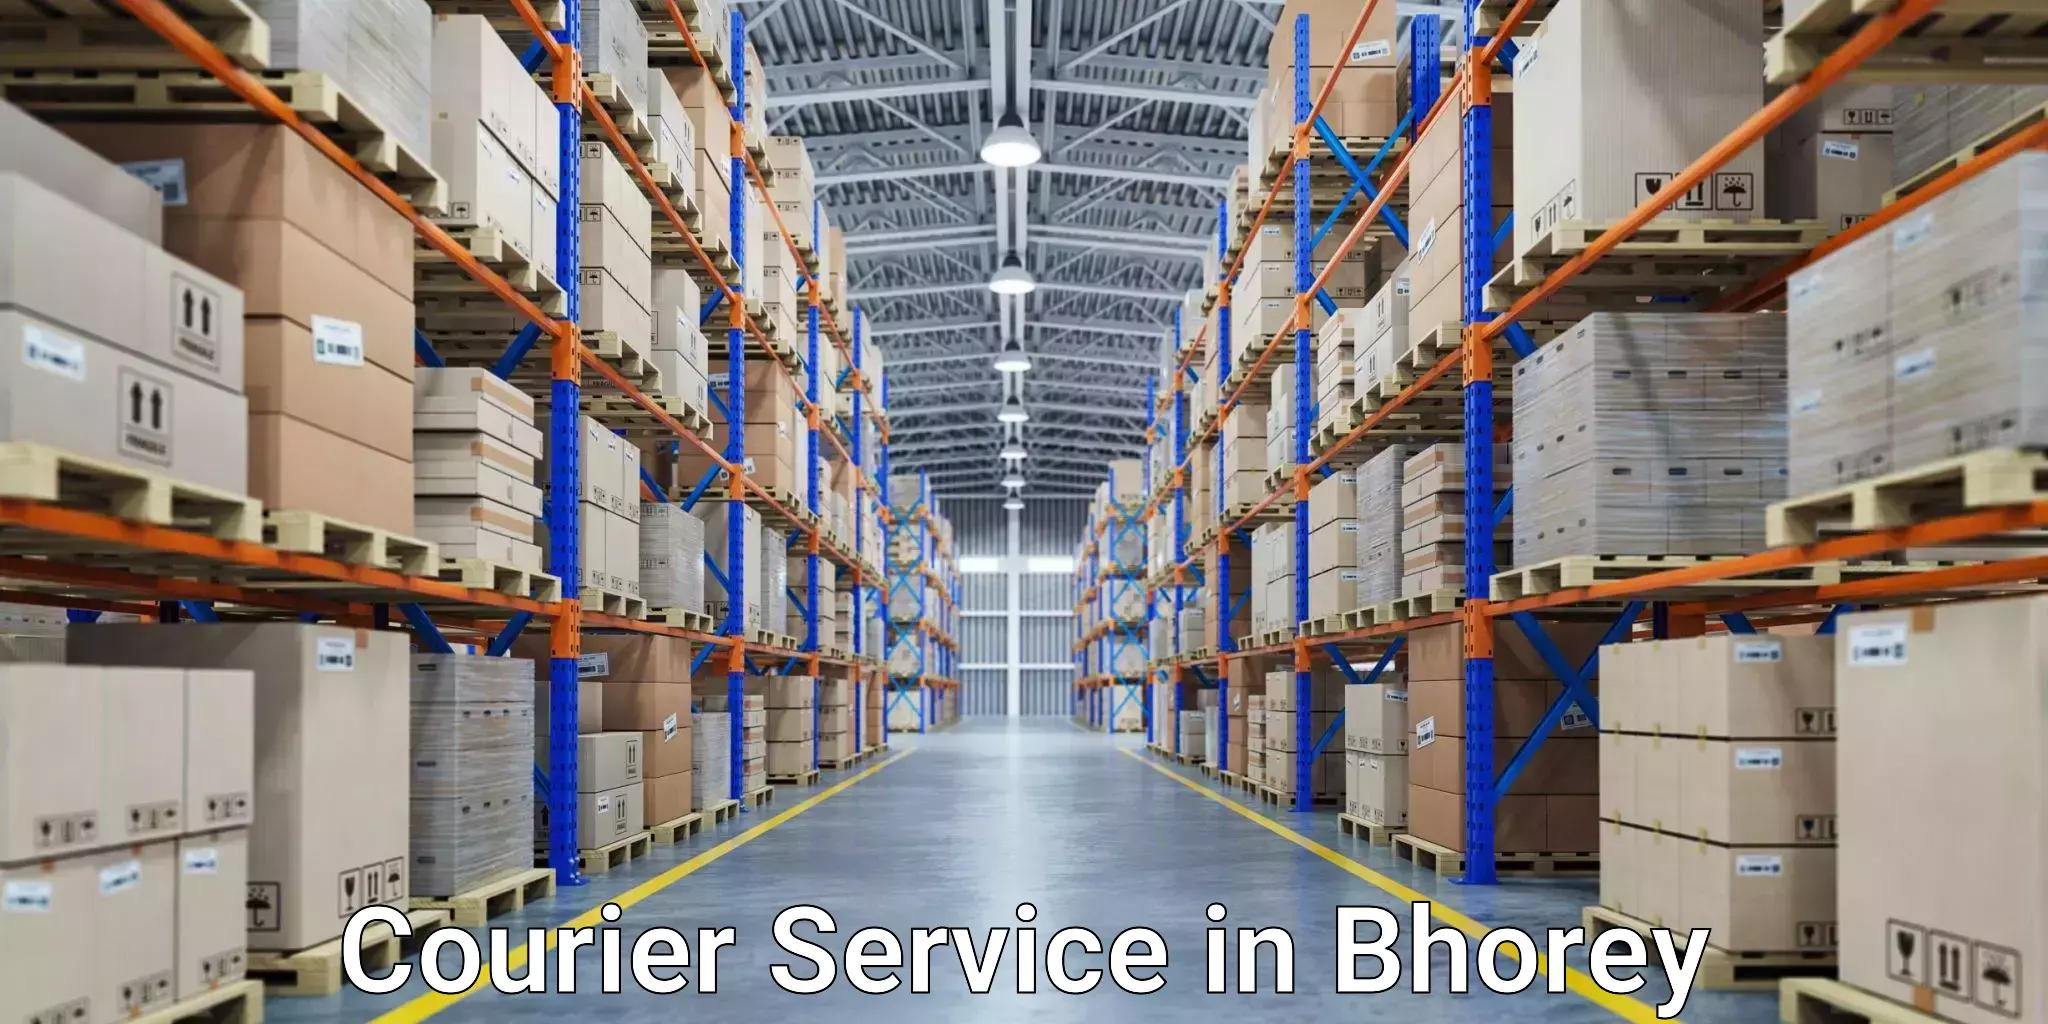 Comprehensive logistics solutions in Bhorey